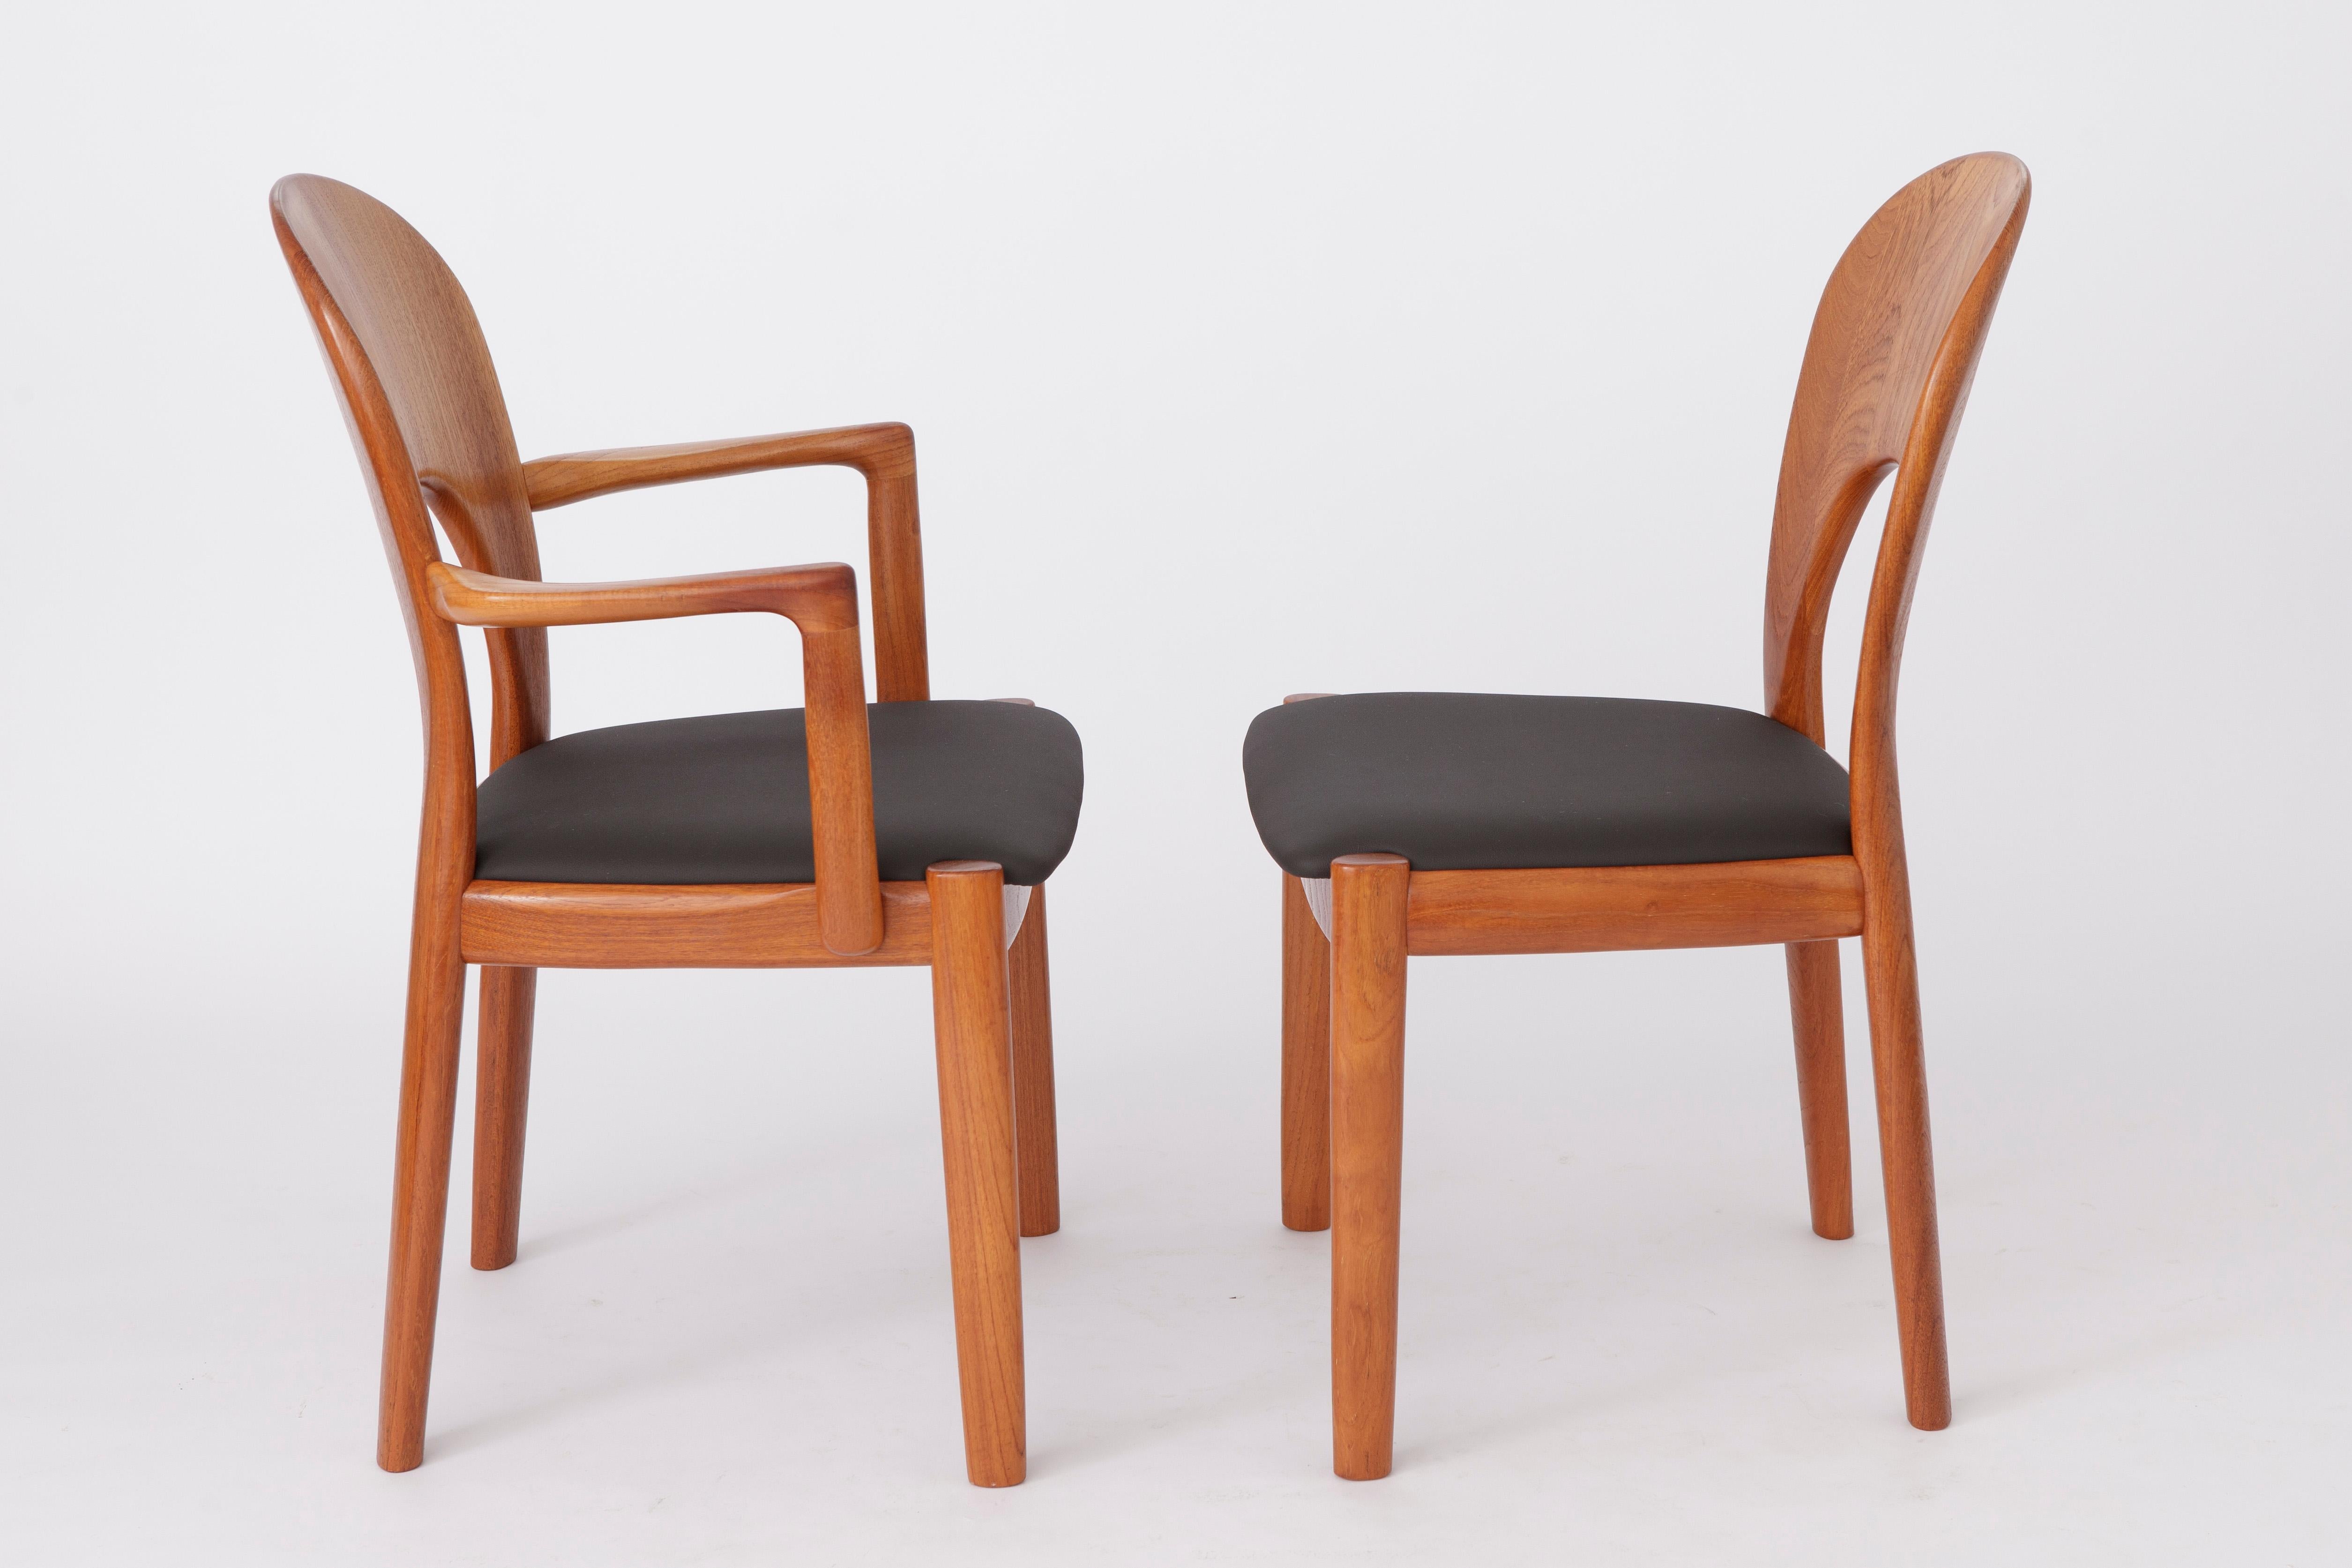 Polished 5 Vintage Chairs by Niels Koefoed 1960s Danish Teak For Sale